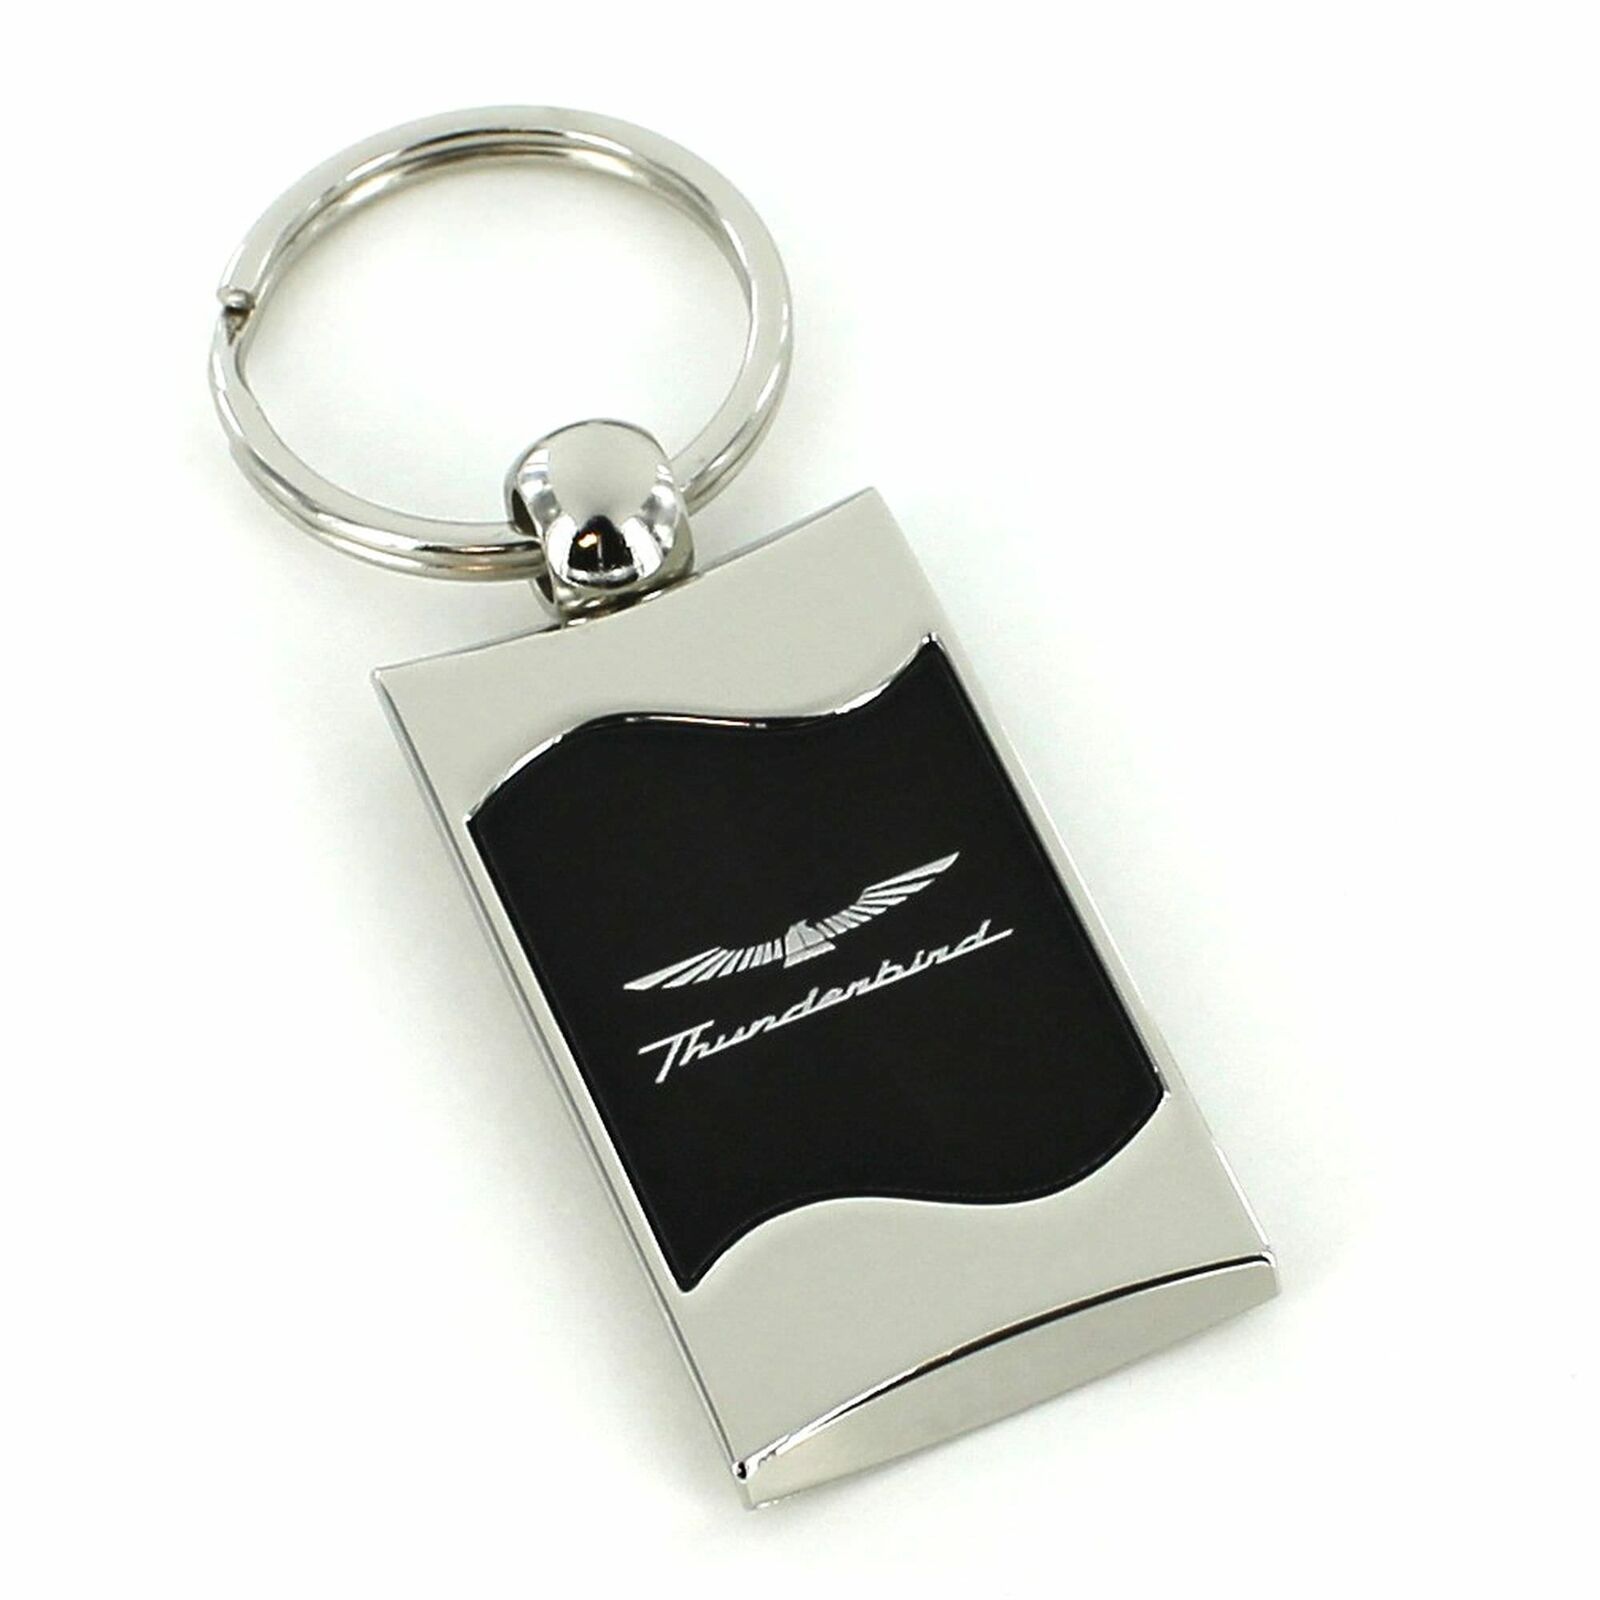 Ford Thunderbird Key Ring (Black)